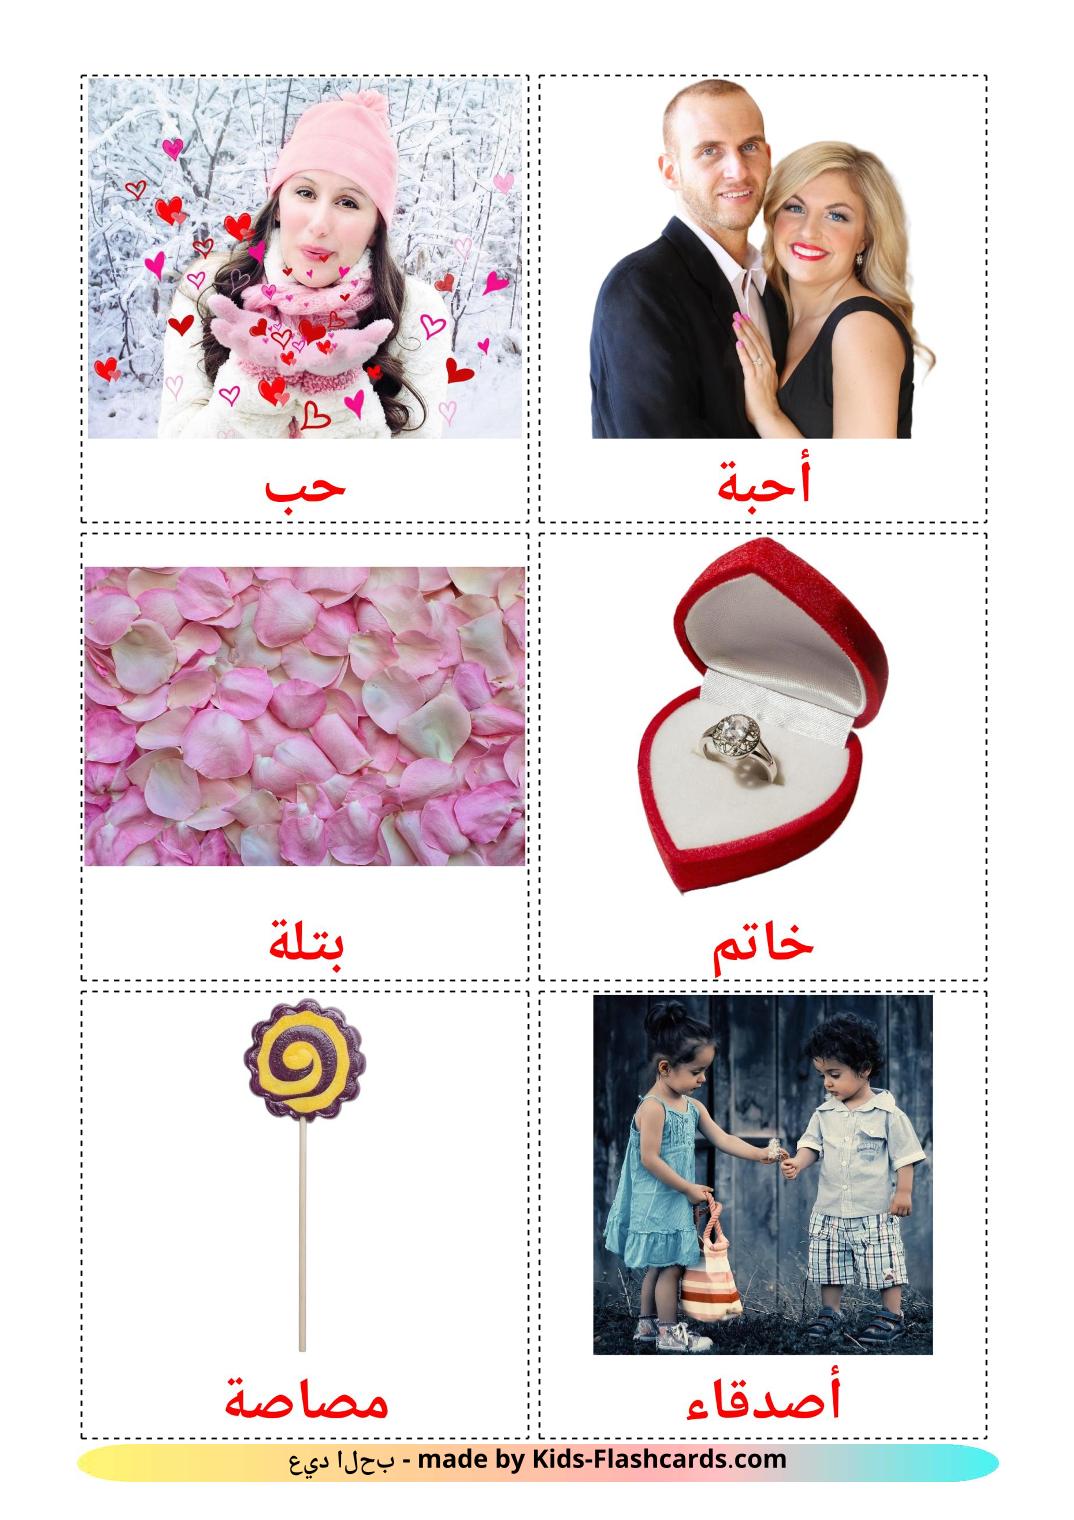 San Valentín - 18 fichas de árabe para imprimir gratis 